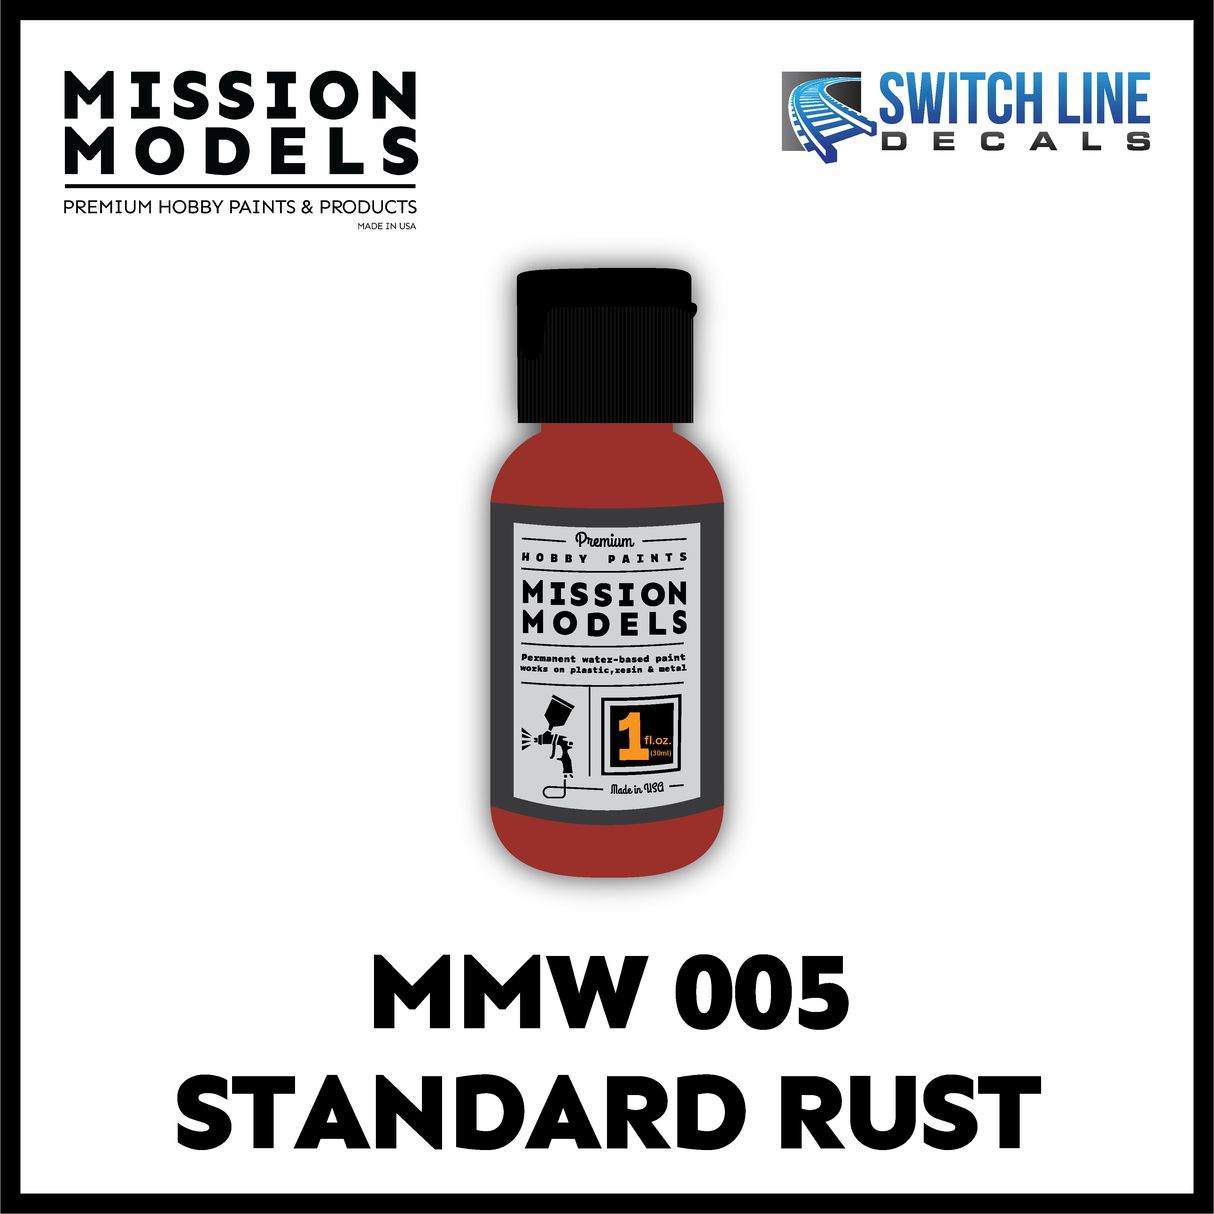 Mission Models Paint Standard Rust 1oz